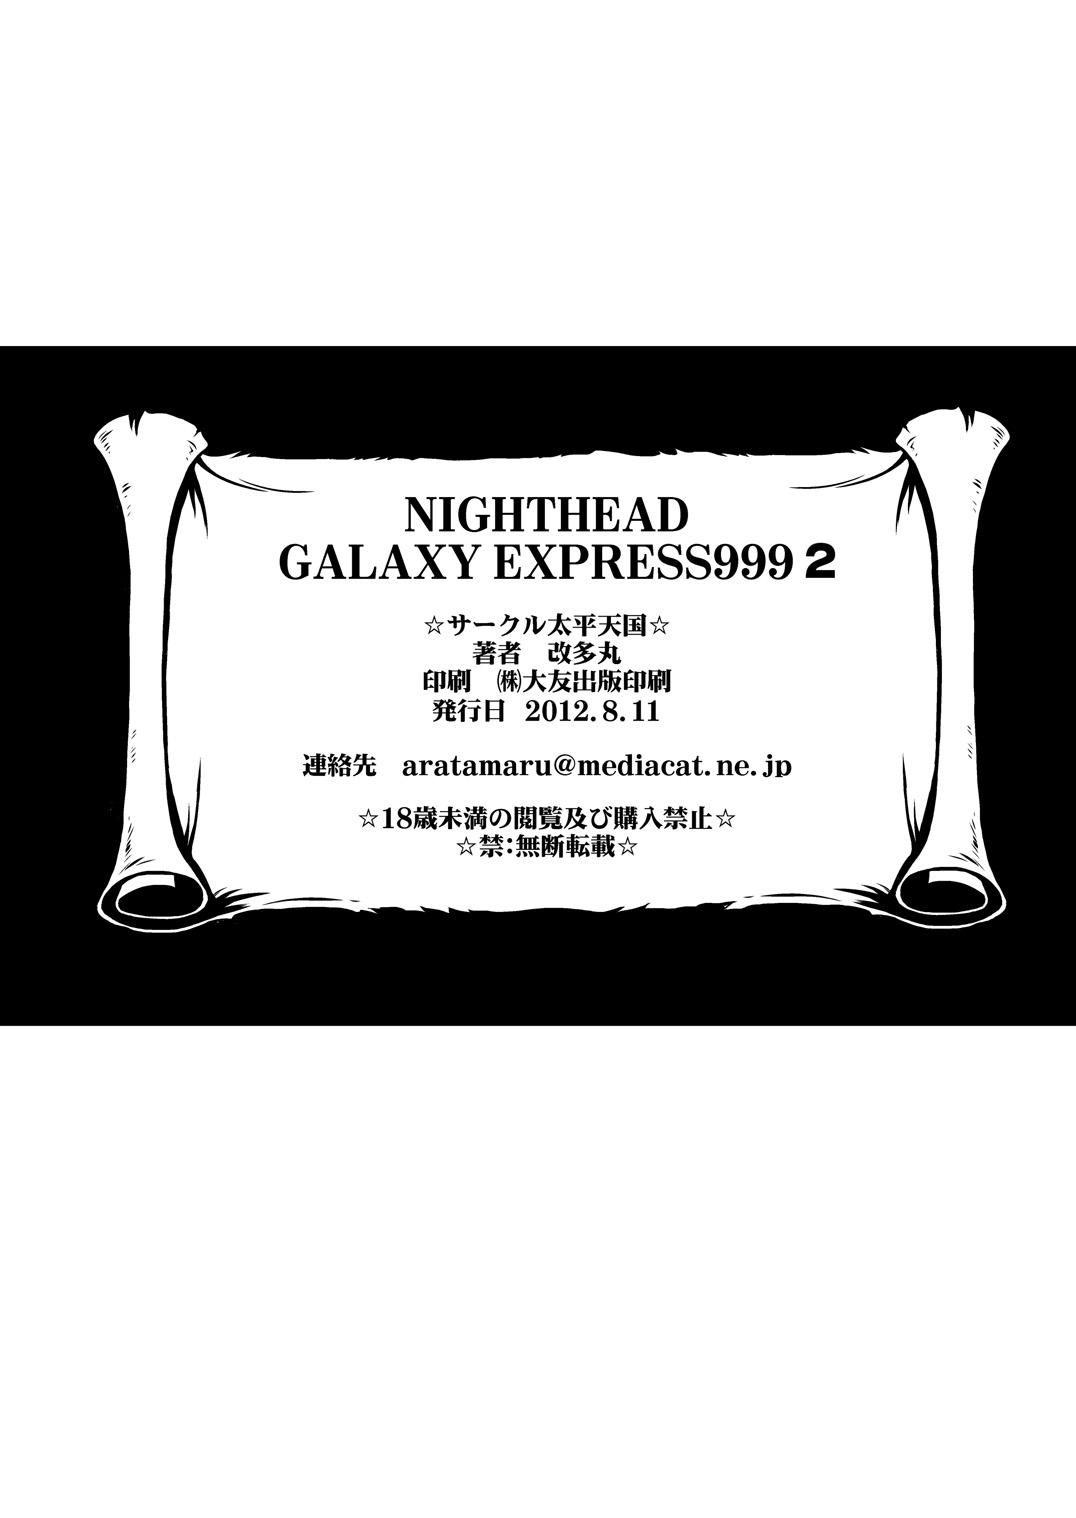 NIGHTHEAD GALAXY EXPRESS 999 2 22